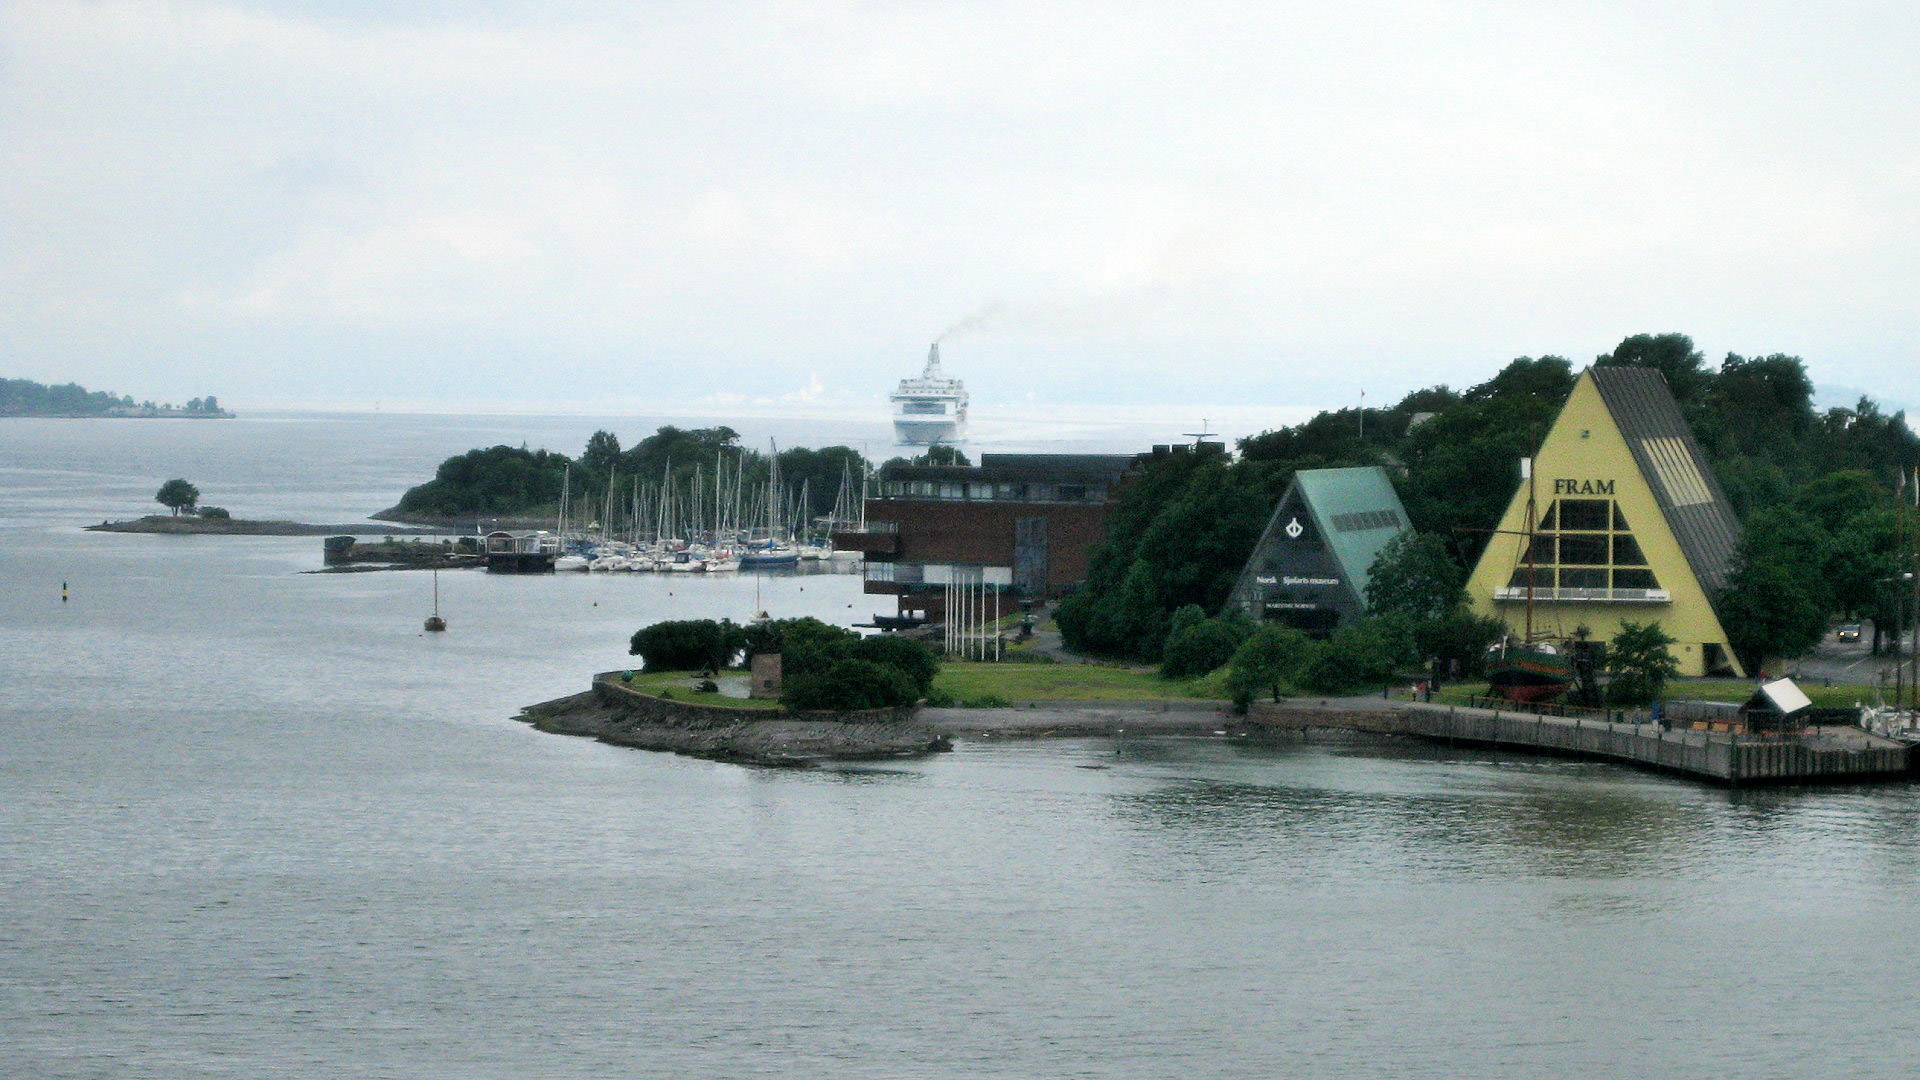 Oslofjord: Fram- und Wikinger-Museum